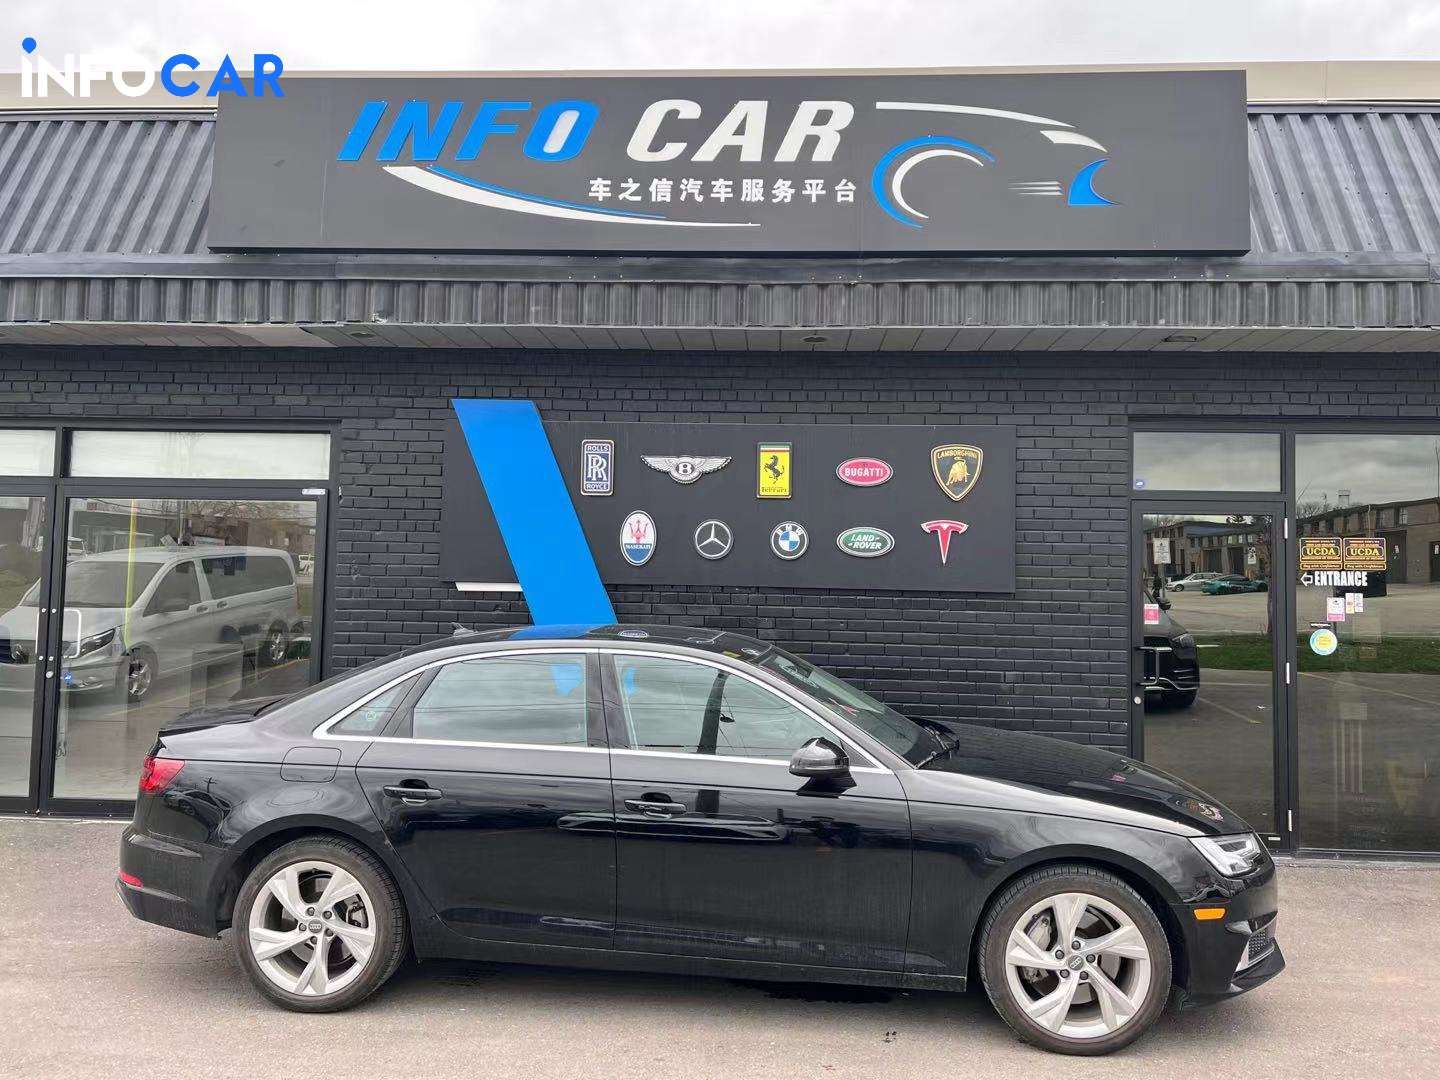 2019 Audi A4 null - INFOCAR - Toronto Auto Trading Platform